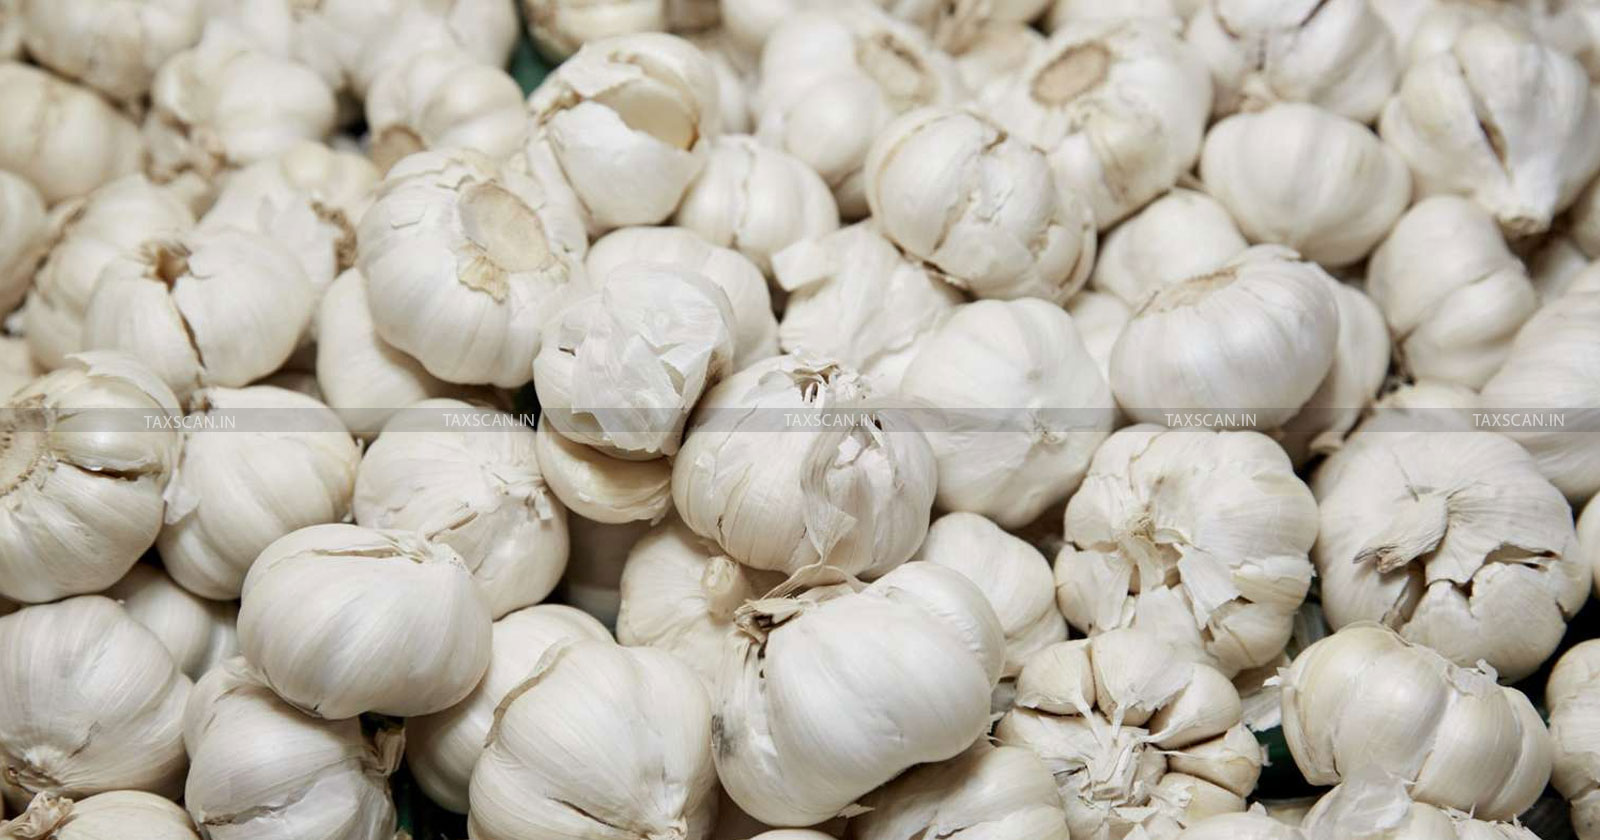 CESTAT Chandigarh - CESTAT - CESTAT garlic import ruling - Release of seized garlic CESTAT - Taxscan